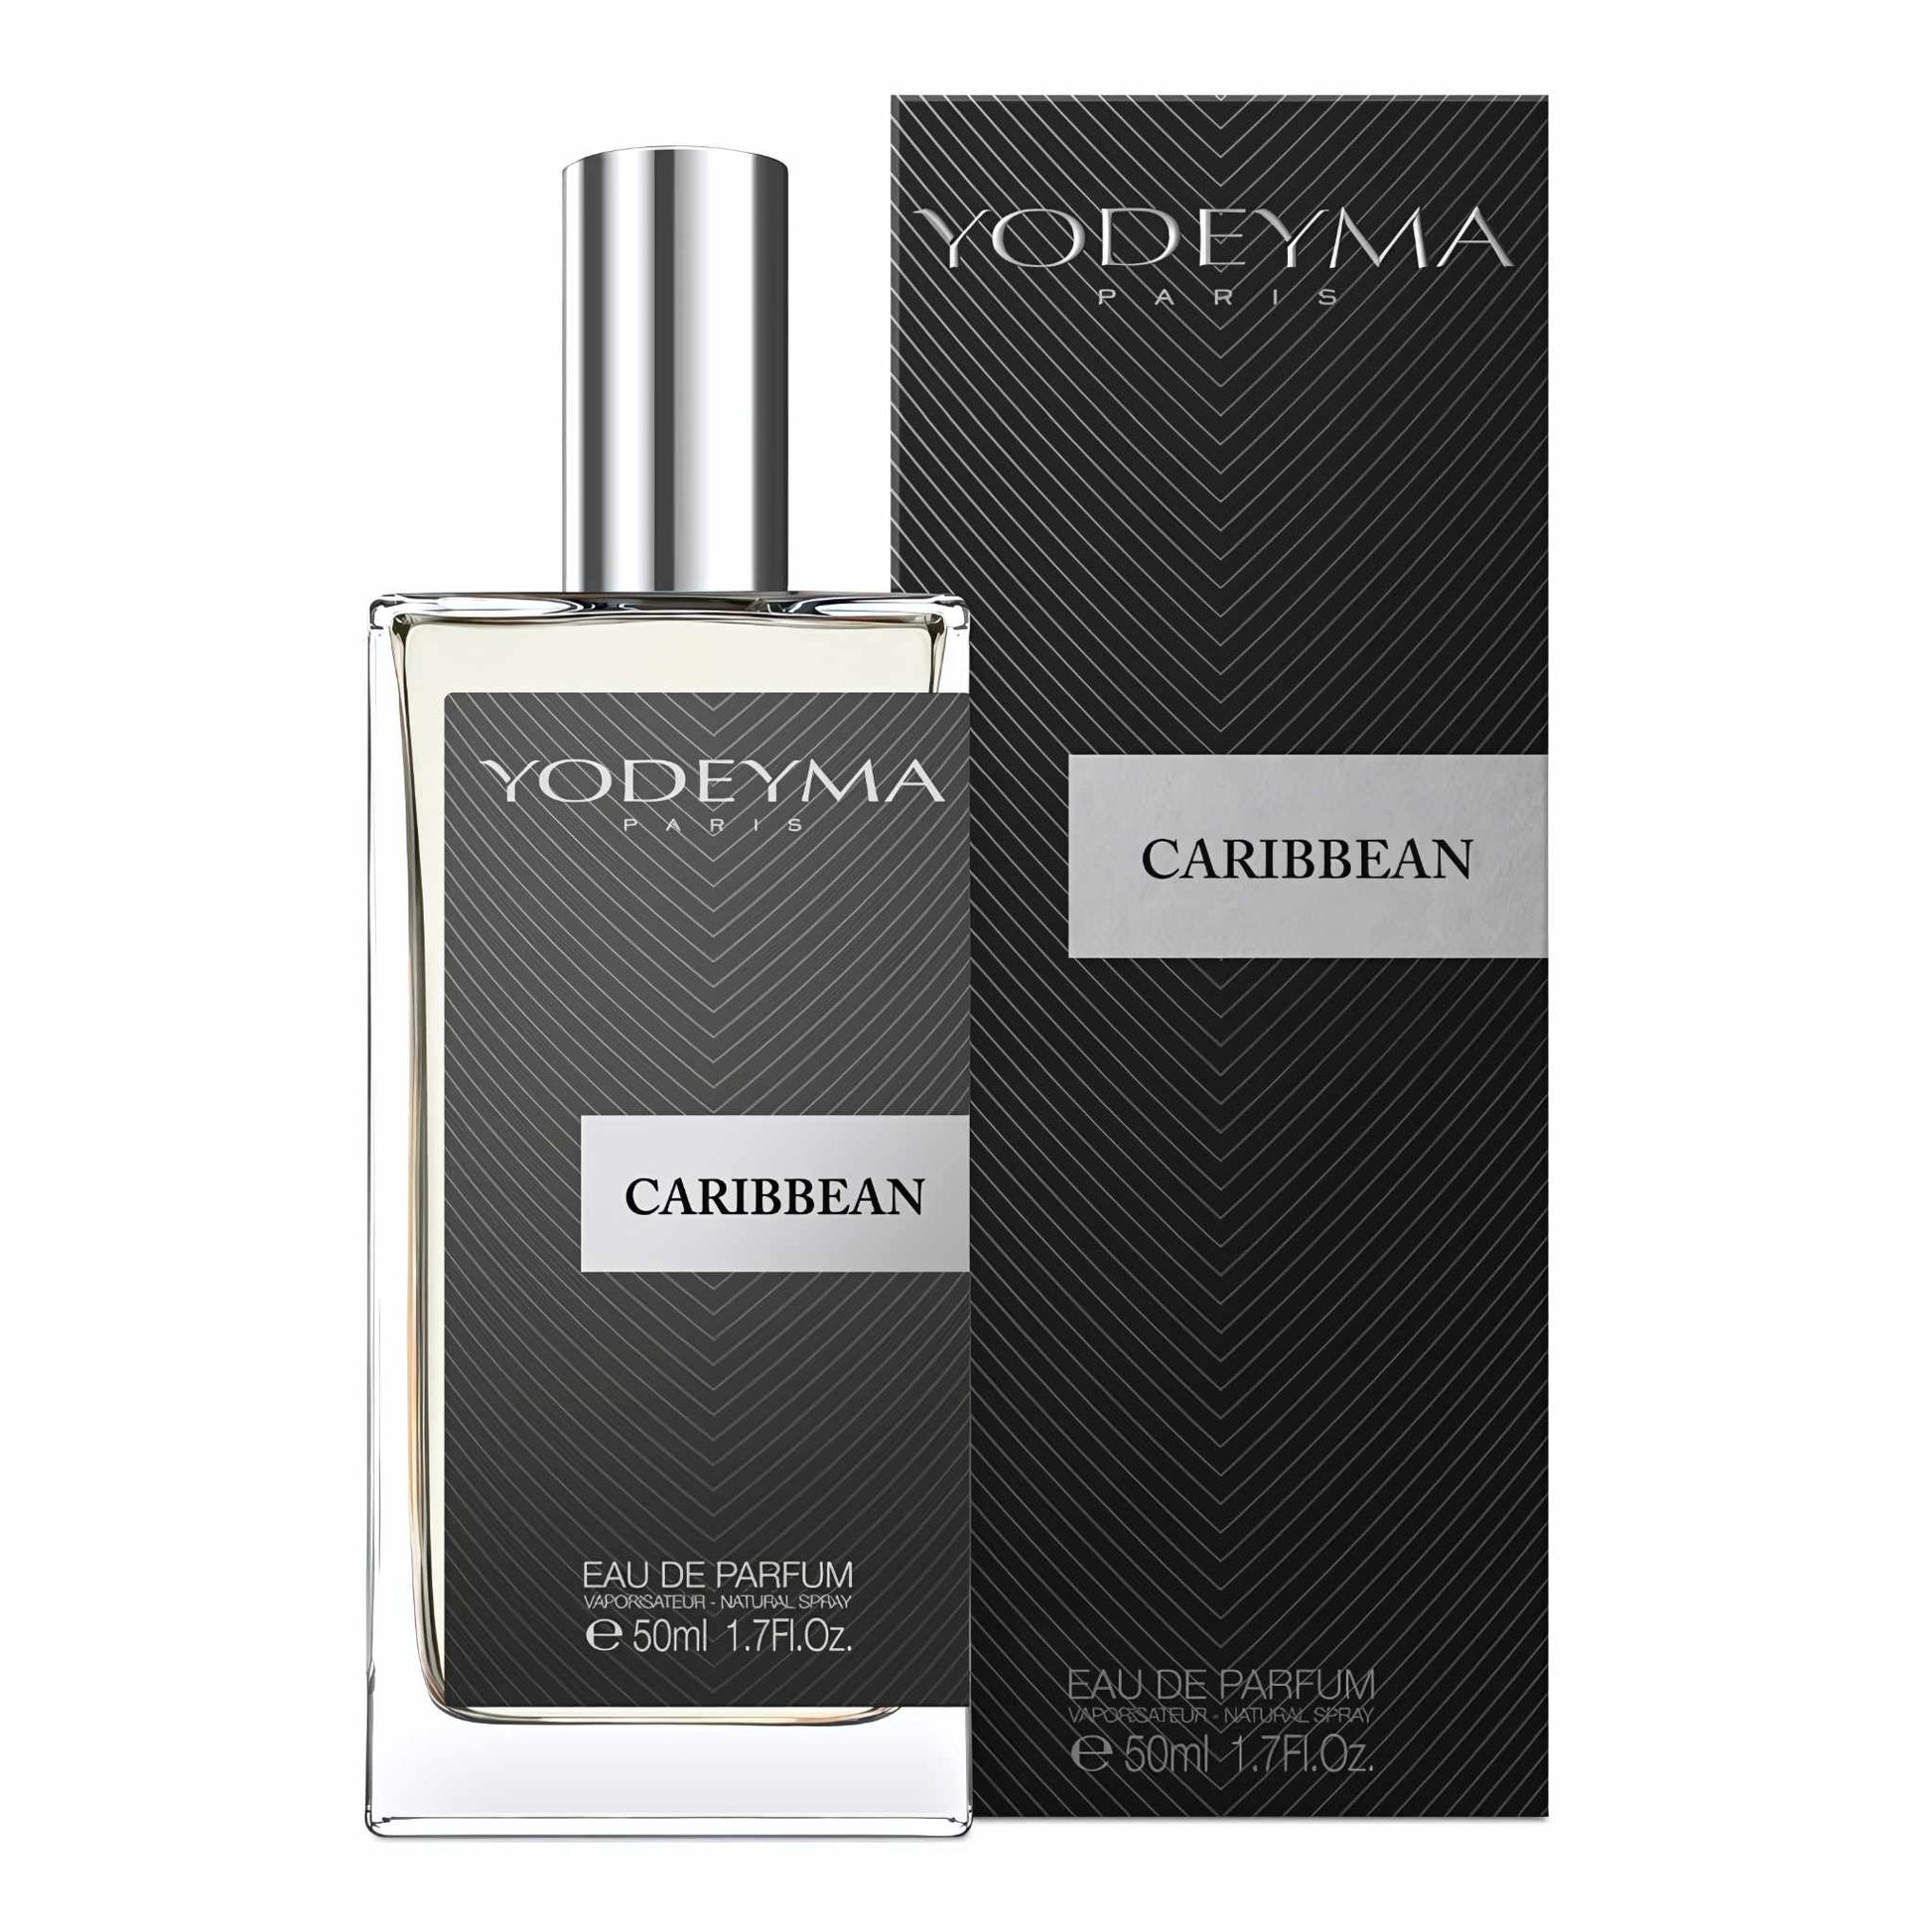 Yodeyma Caribbean Eau de Parfum 50 ml